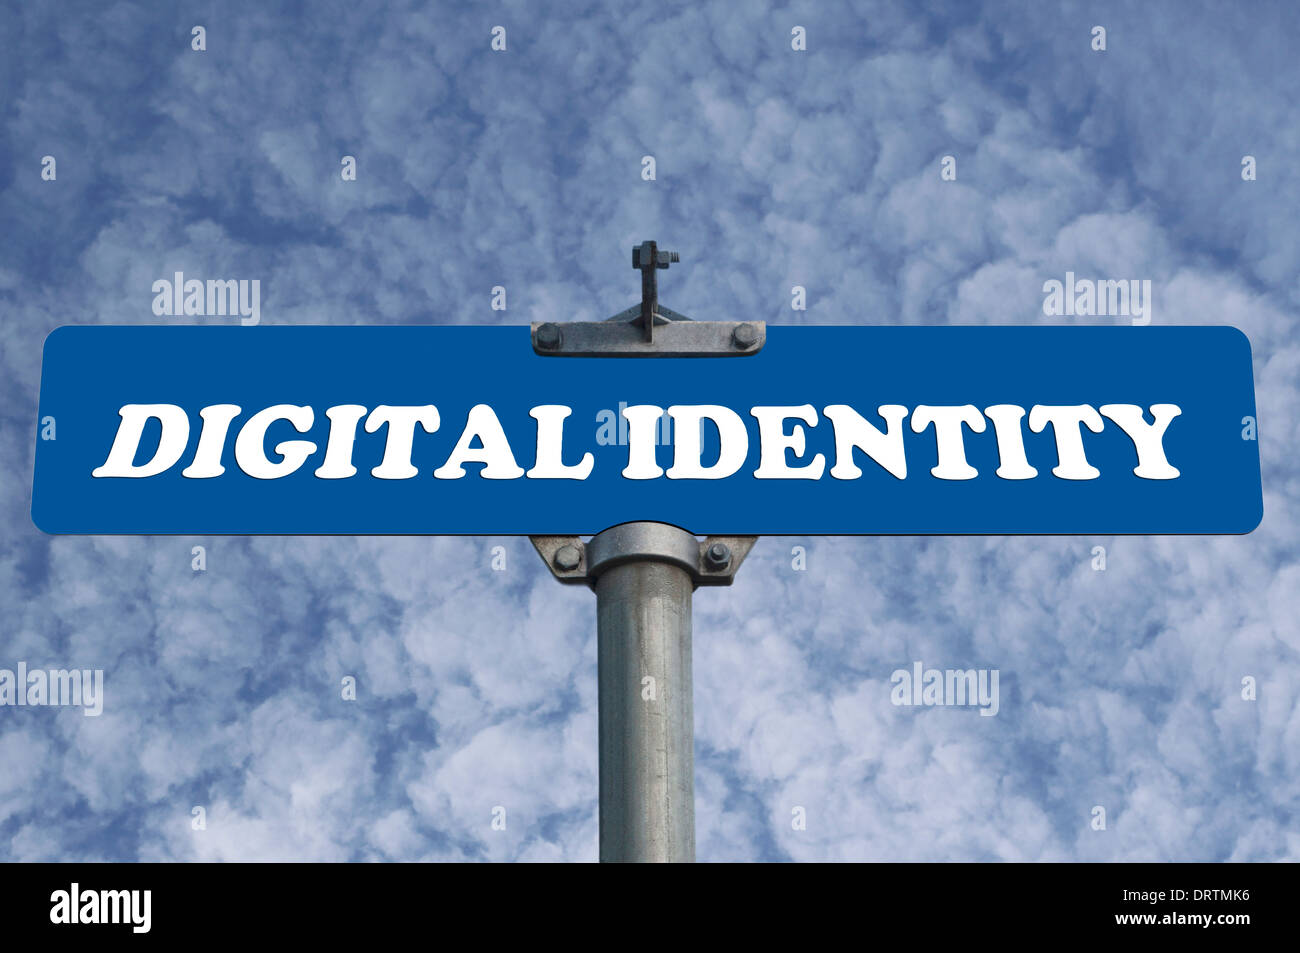 Digital identity road sign Stock Photo